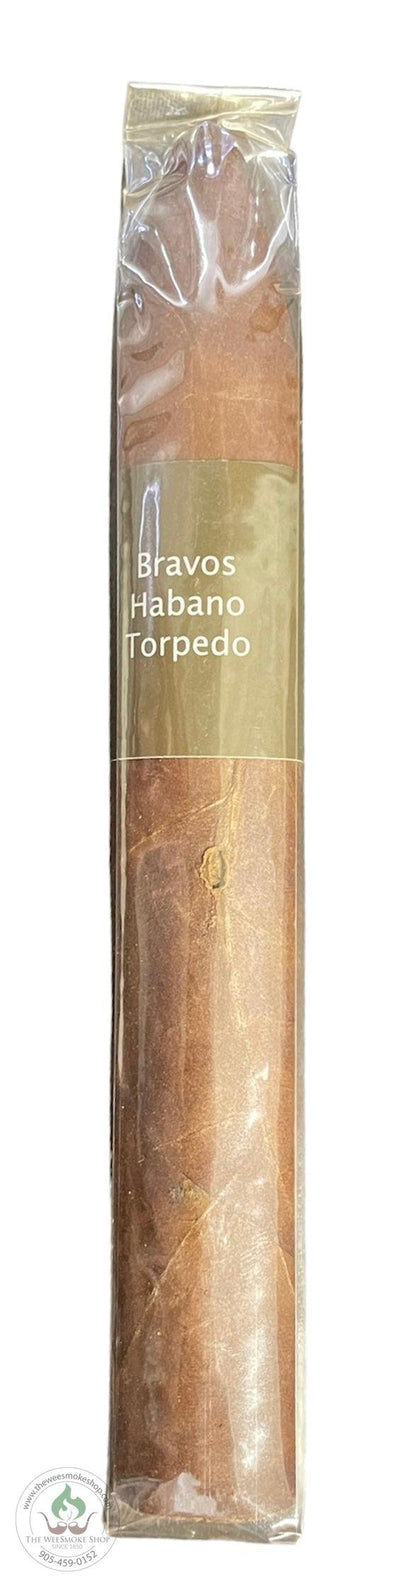 Bravos - Habano Torpedo - The Wee Smoke Shop